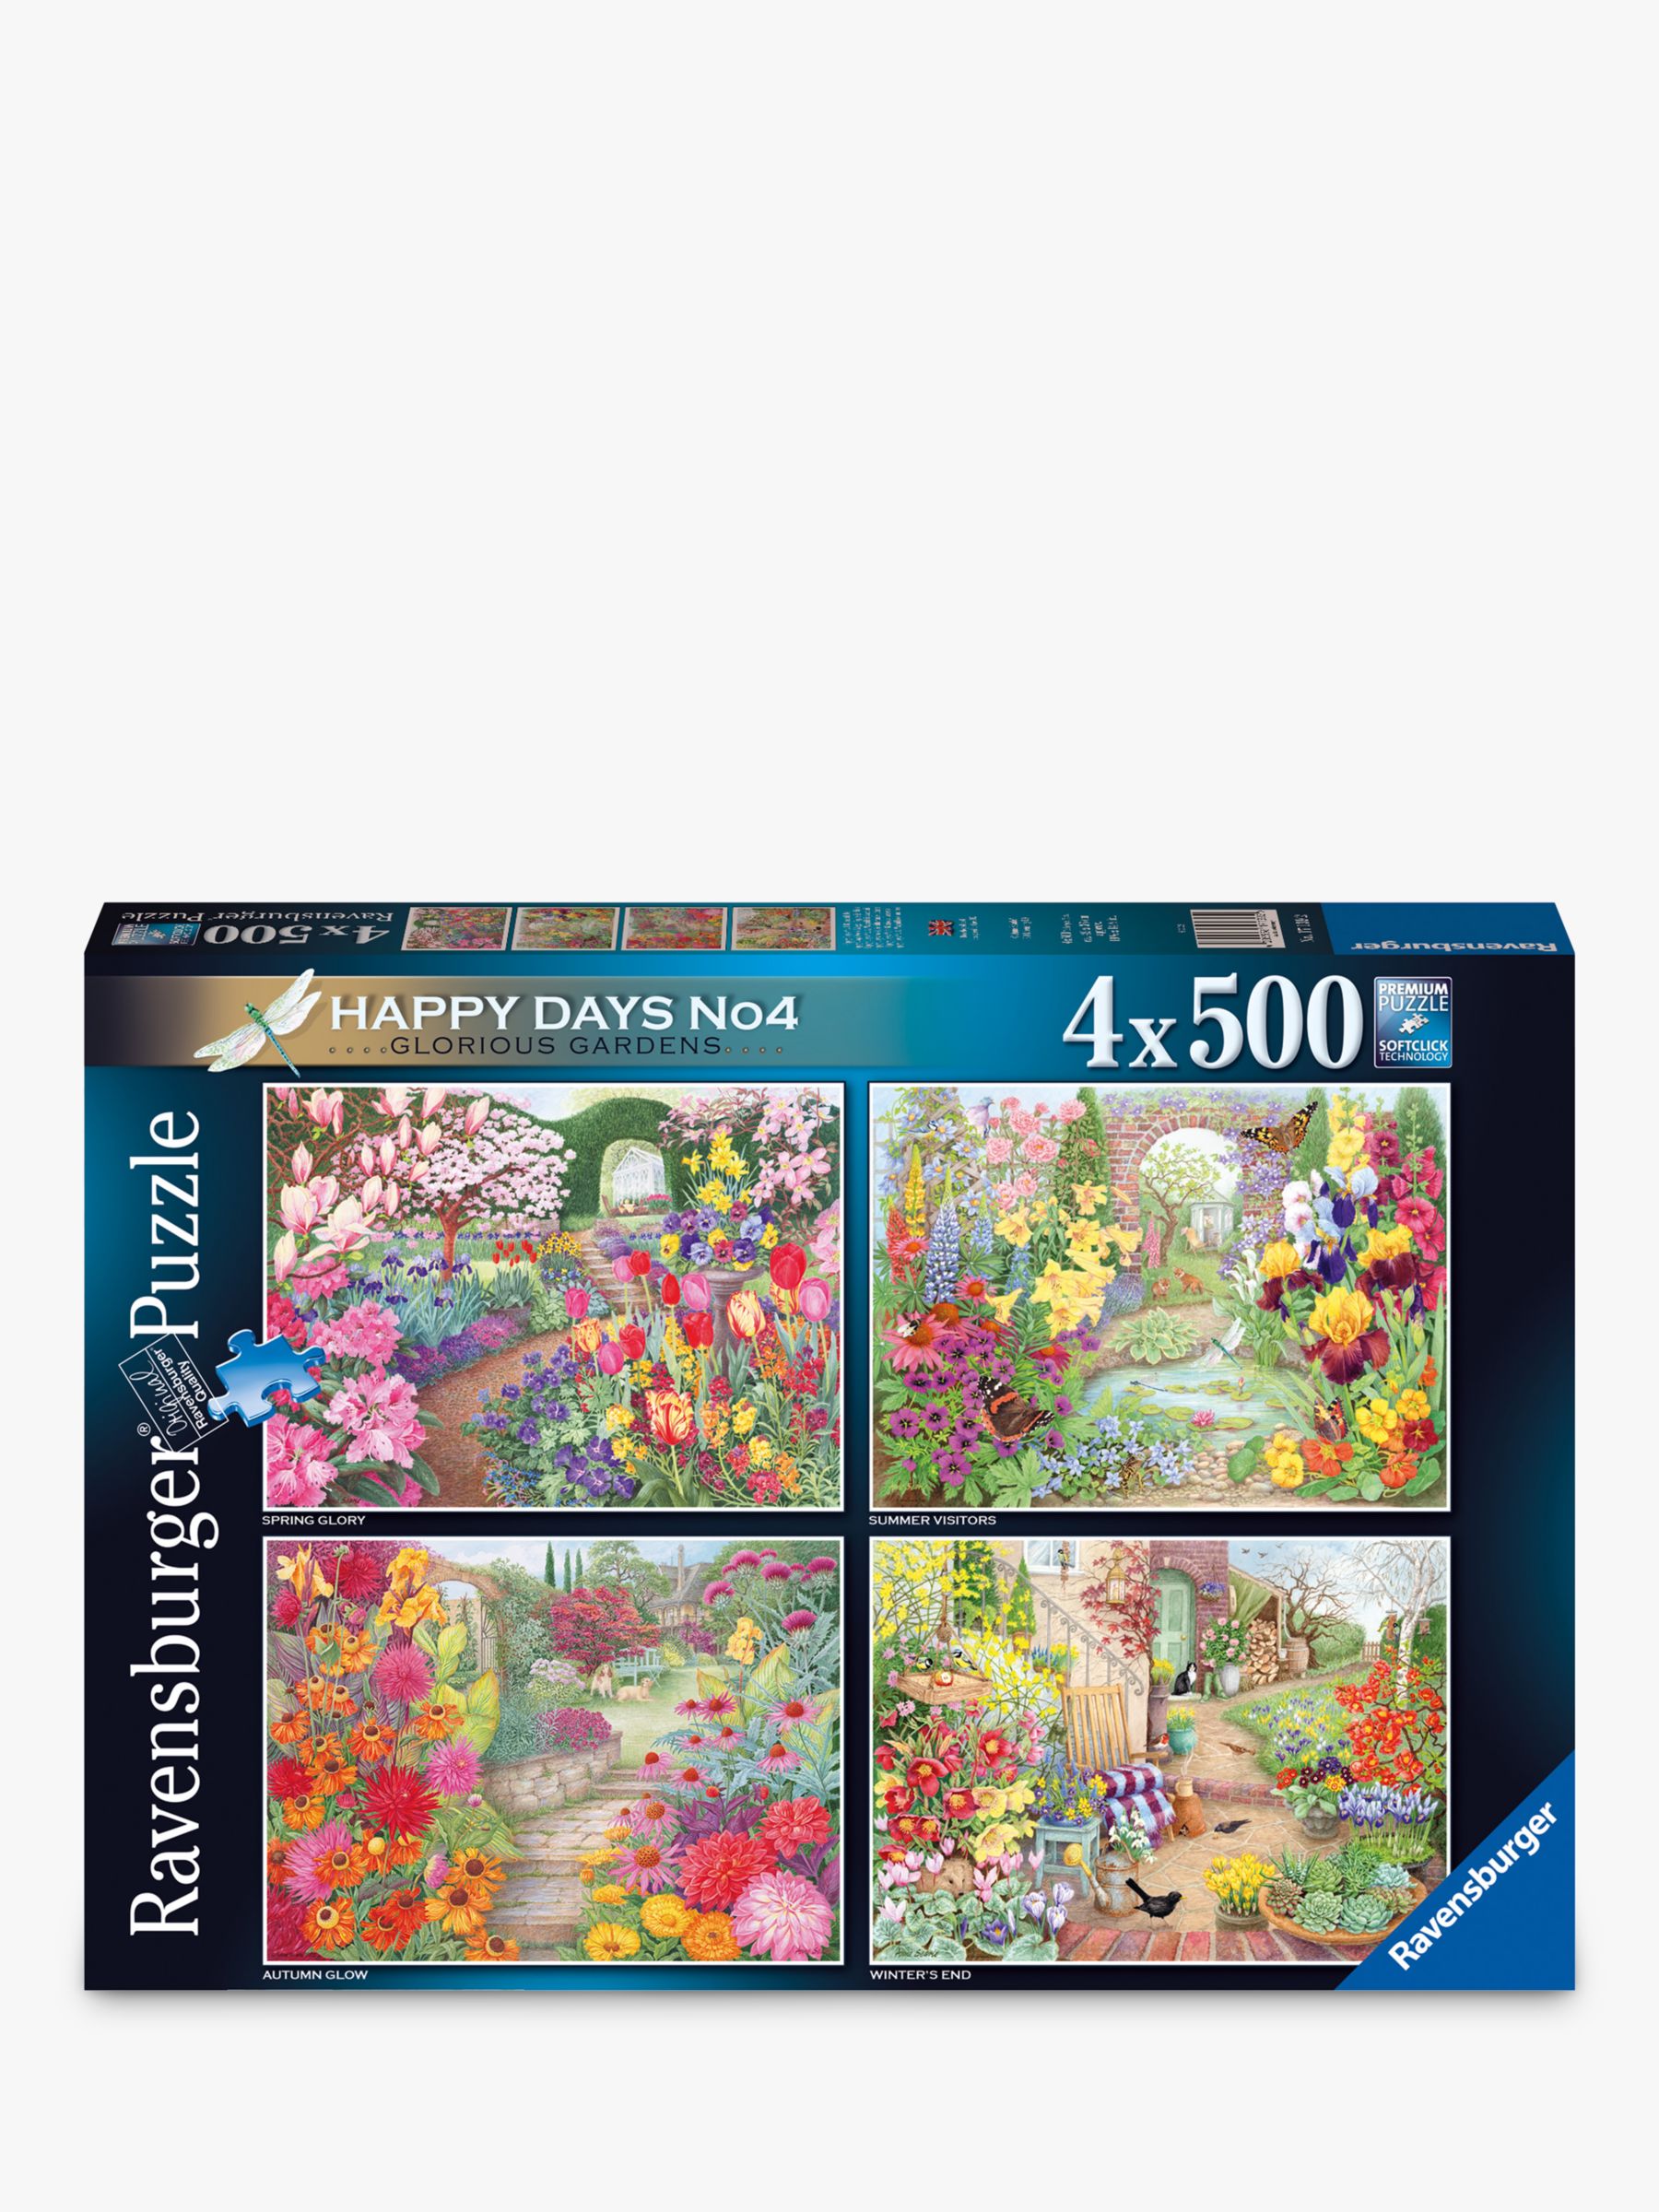 Sloppenwijk Verval Bederven Ravensburger Glorious Gardens Jigsaw Puzzles, Set of 4, 500 Pieces Each